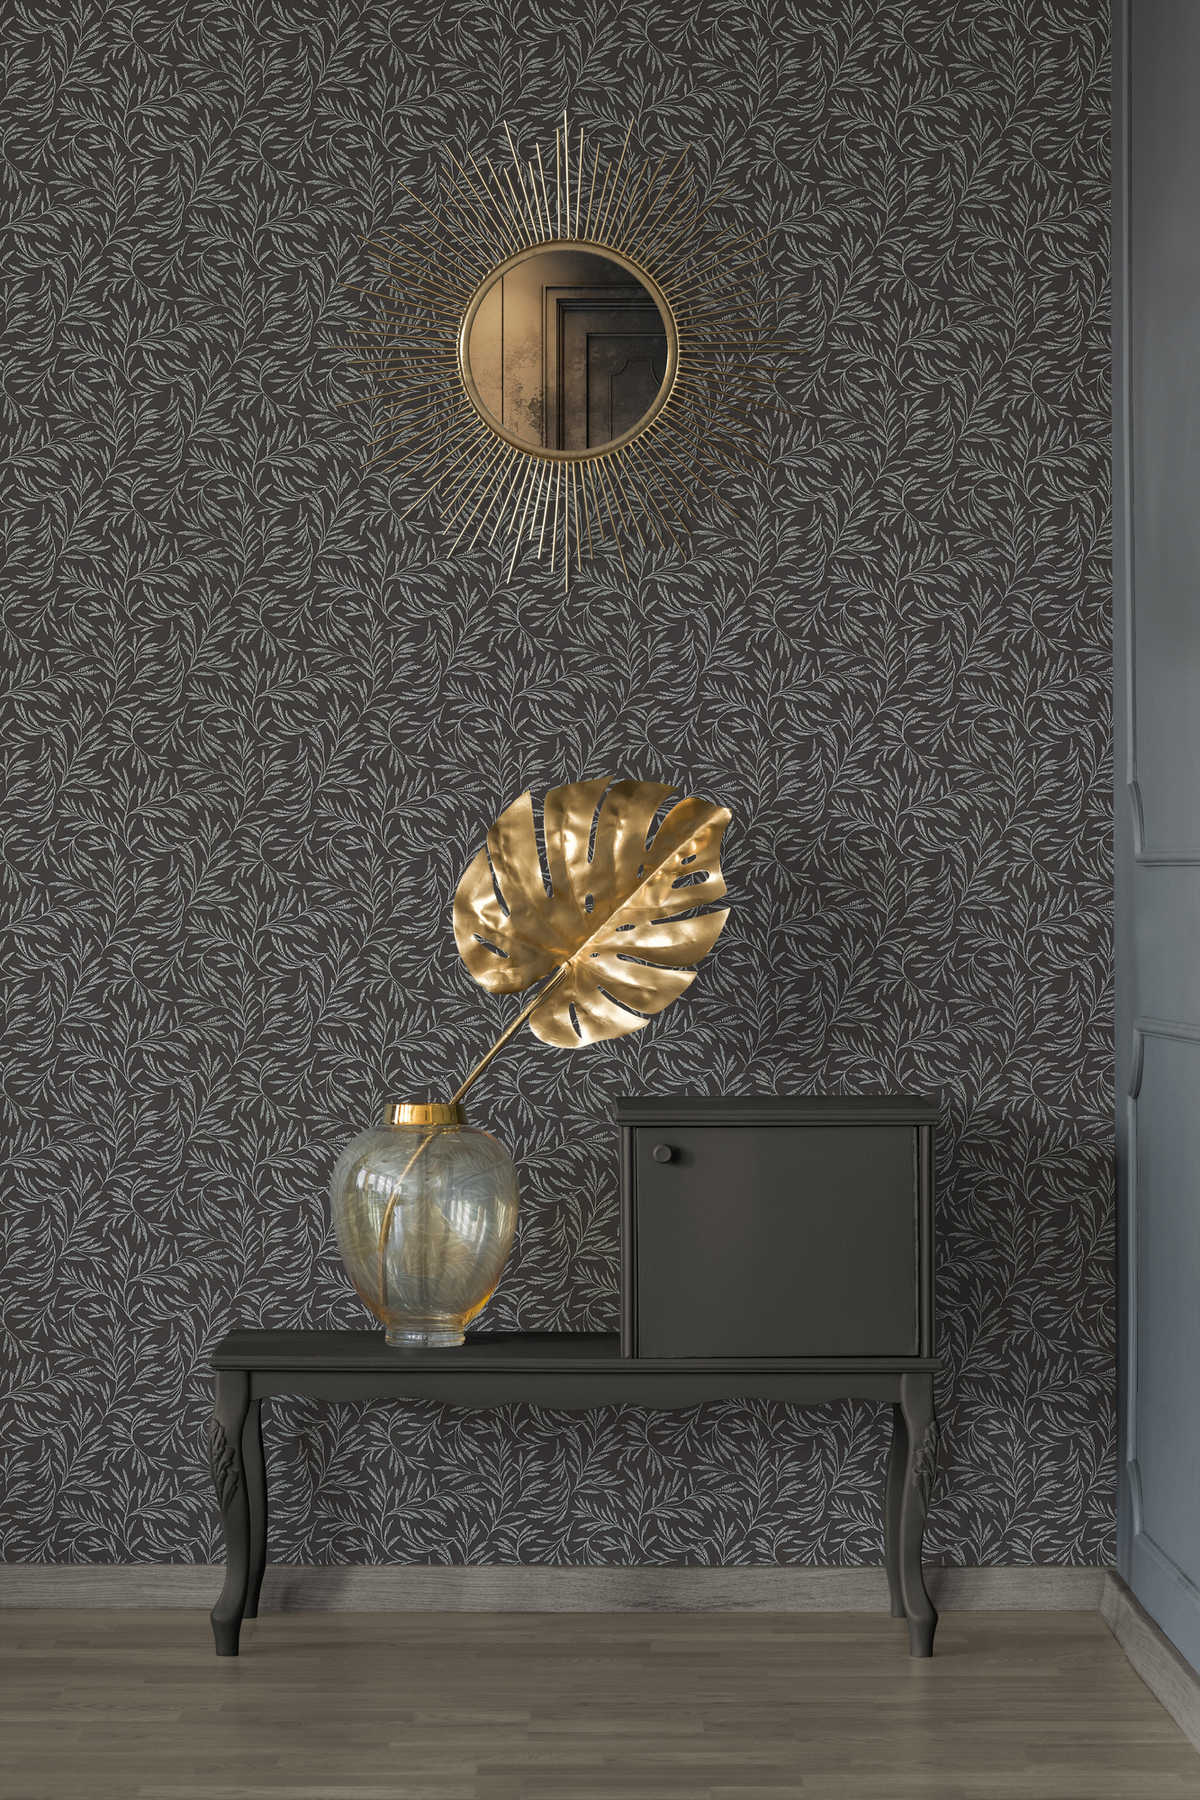             Vlie wallpaper metallic pattern with leaf tendrils - metallic, black
        